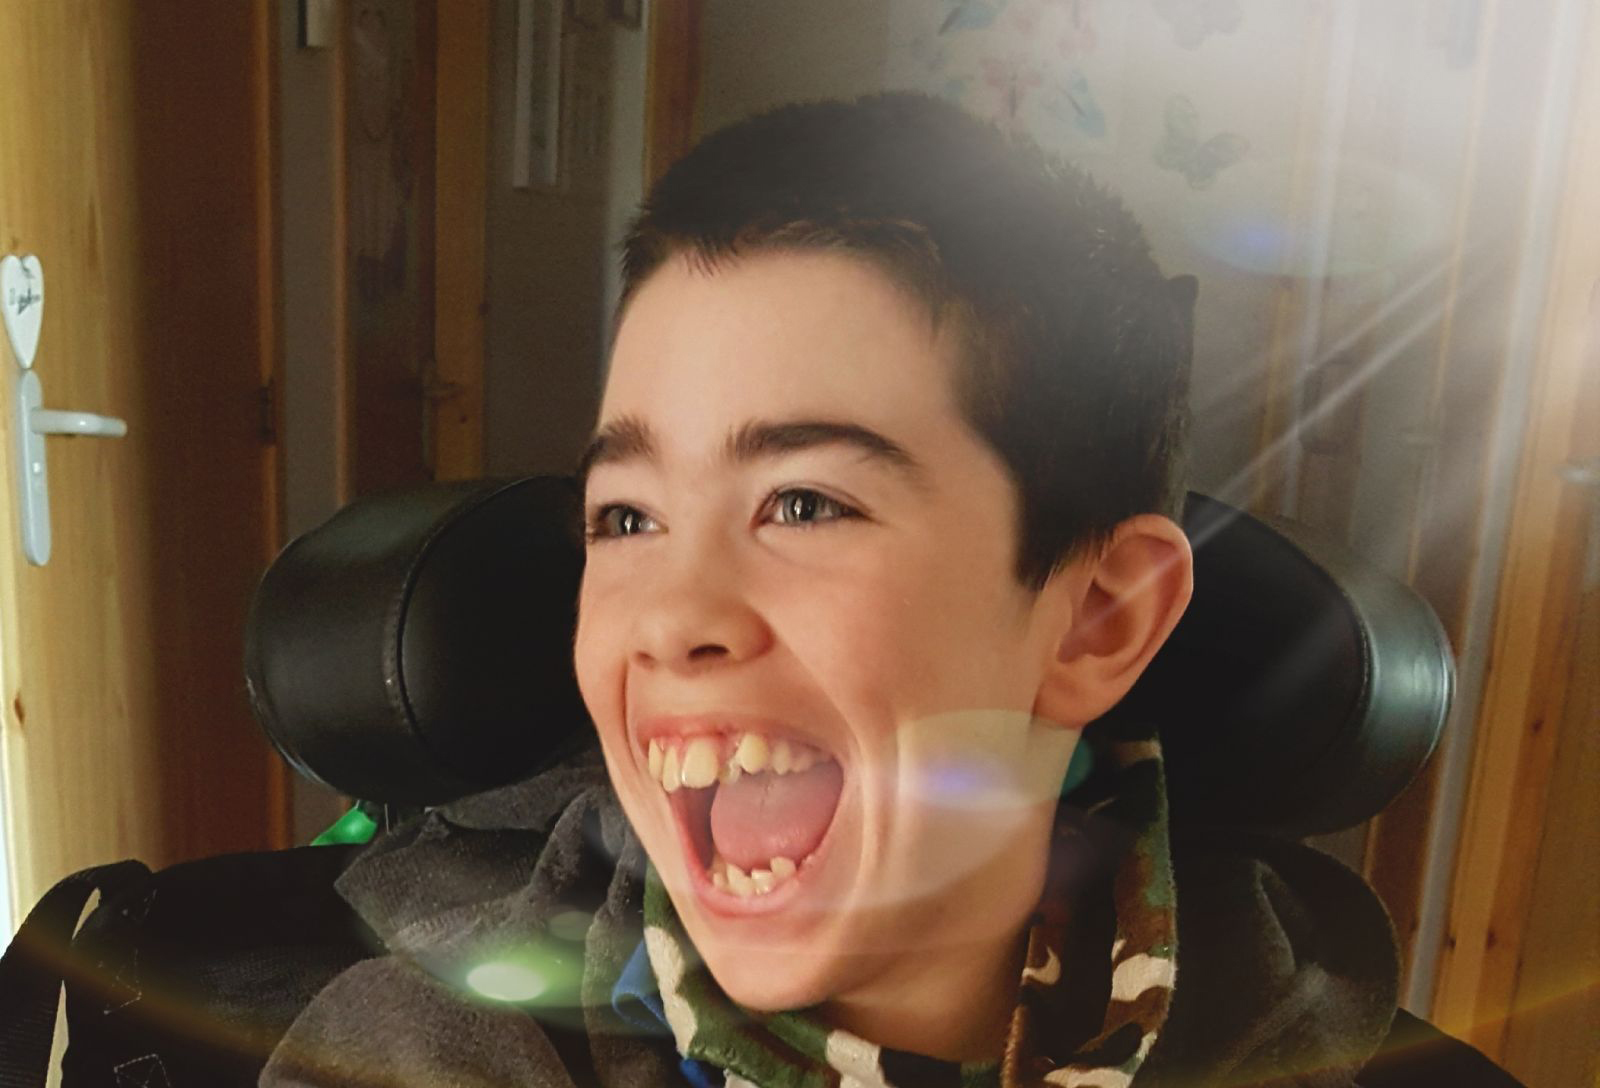 Cameron MacColl
Fundraiser for quadriplegic cerebral palsy boy.